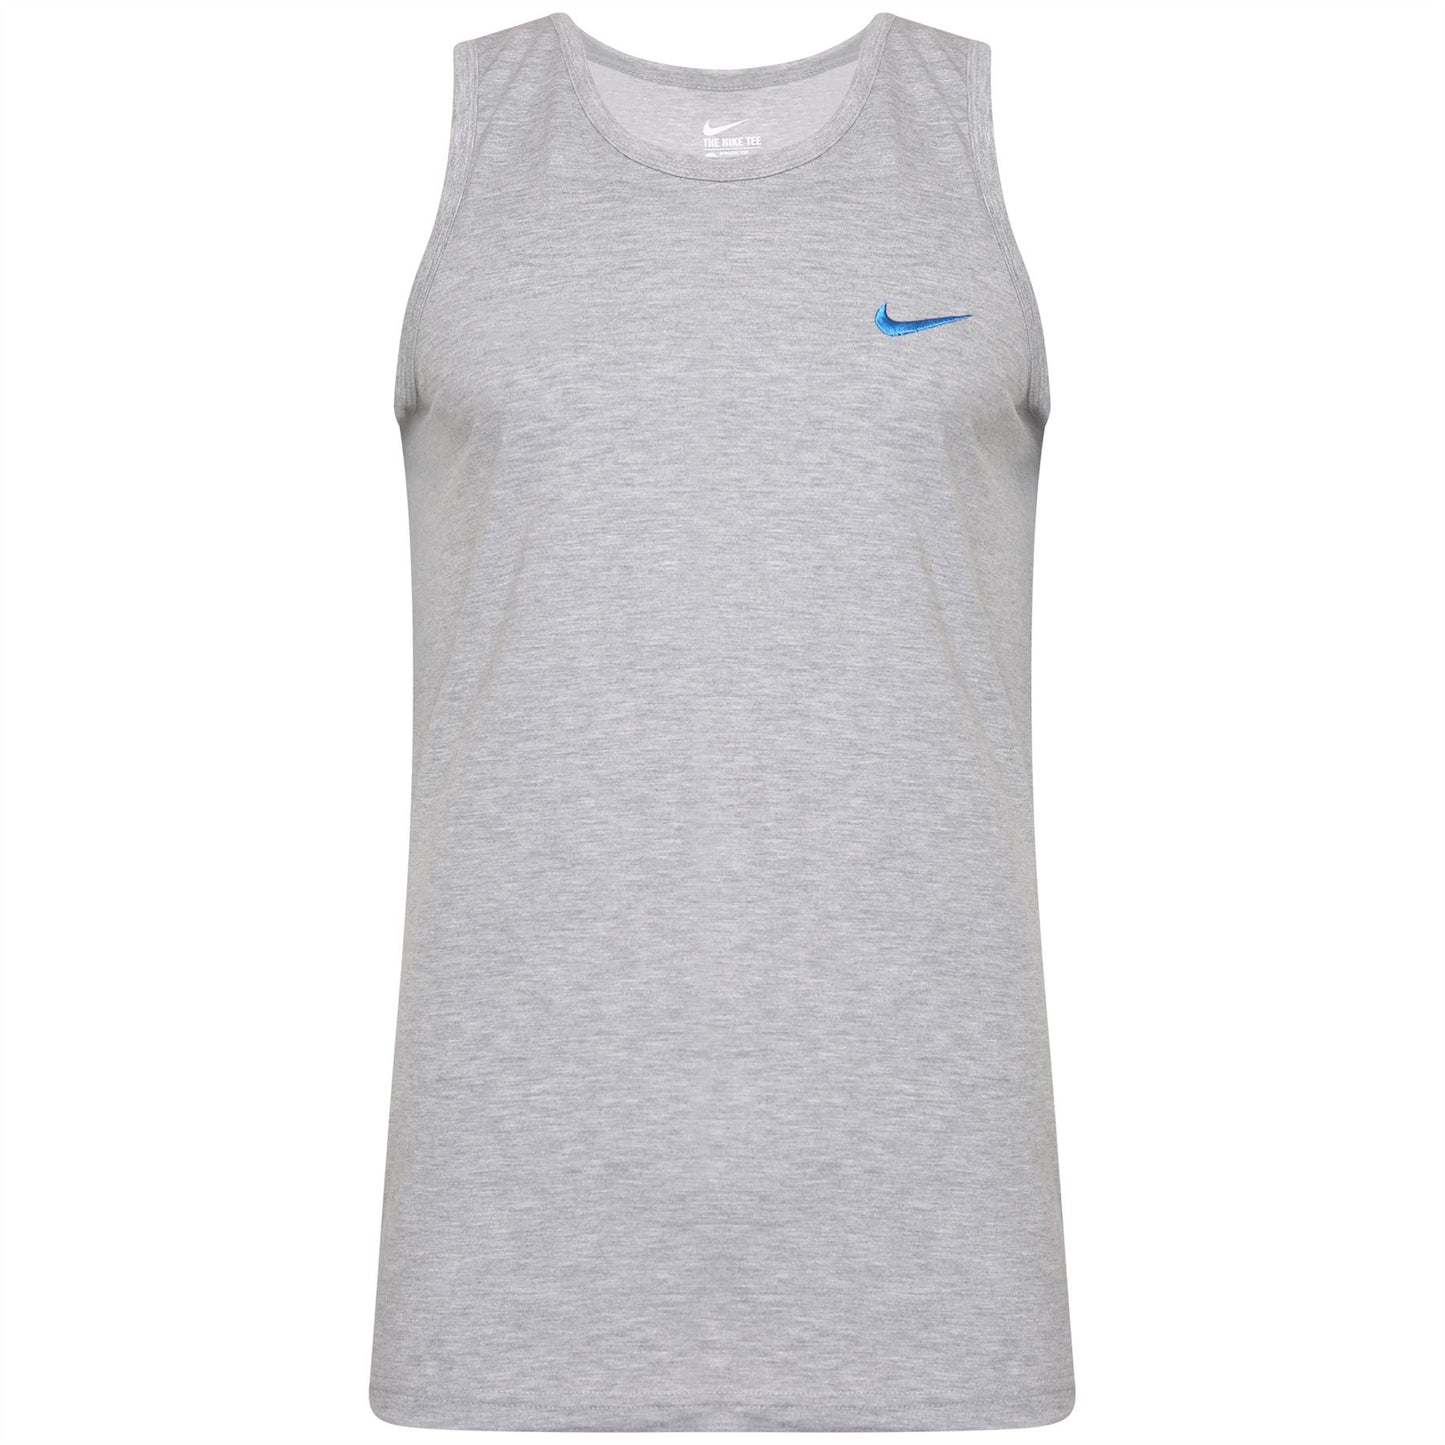 Men's Nike Logo Vest Tank Top Sleeveless T-Shirt Singlet - Grey